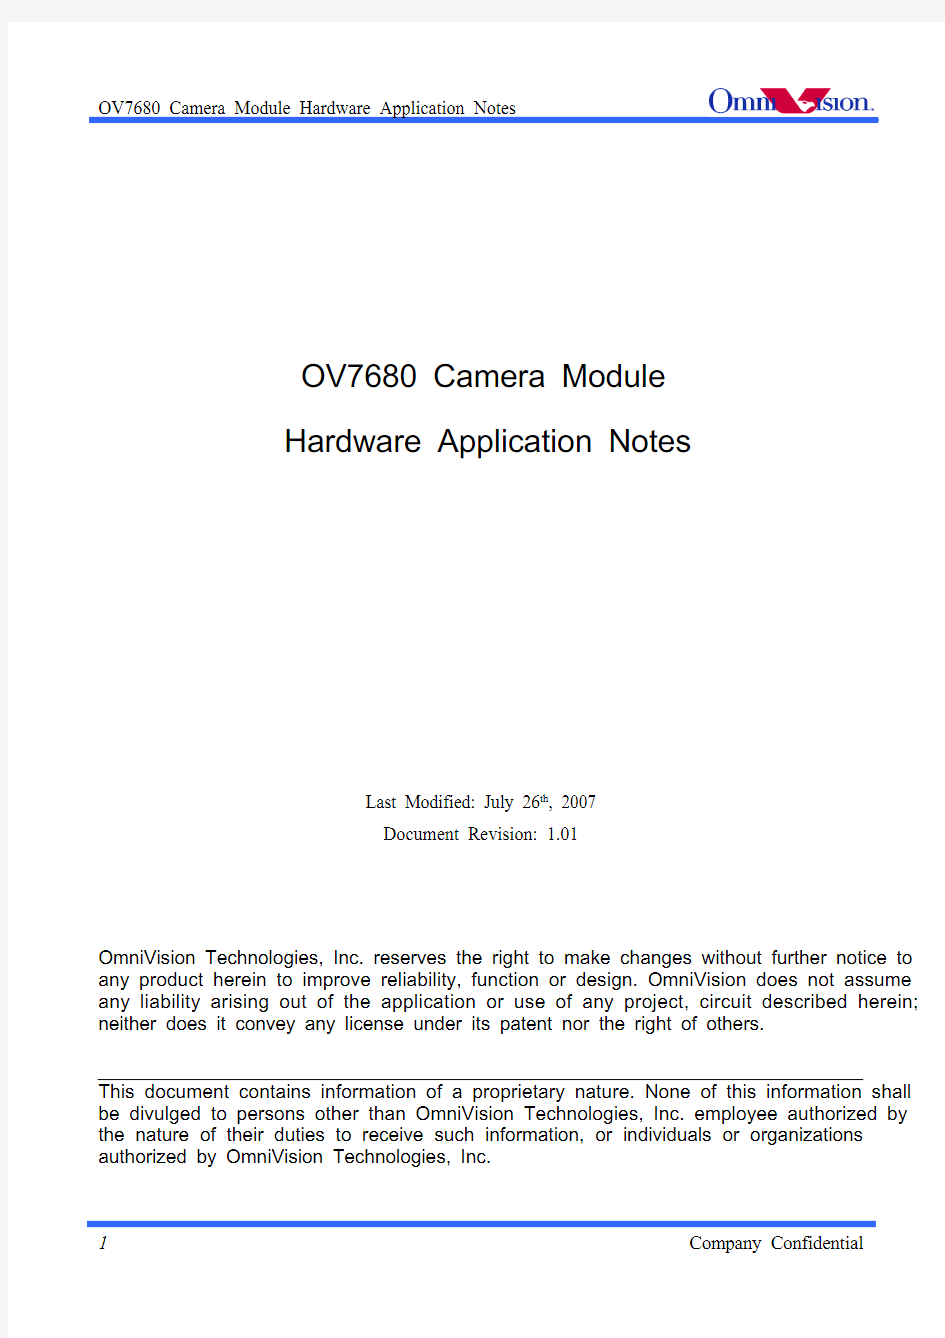 OV7680 Camera Module Hardware Application Notes.